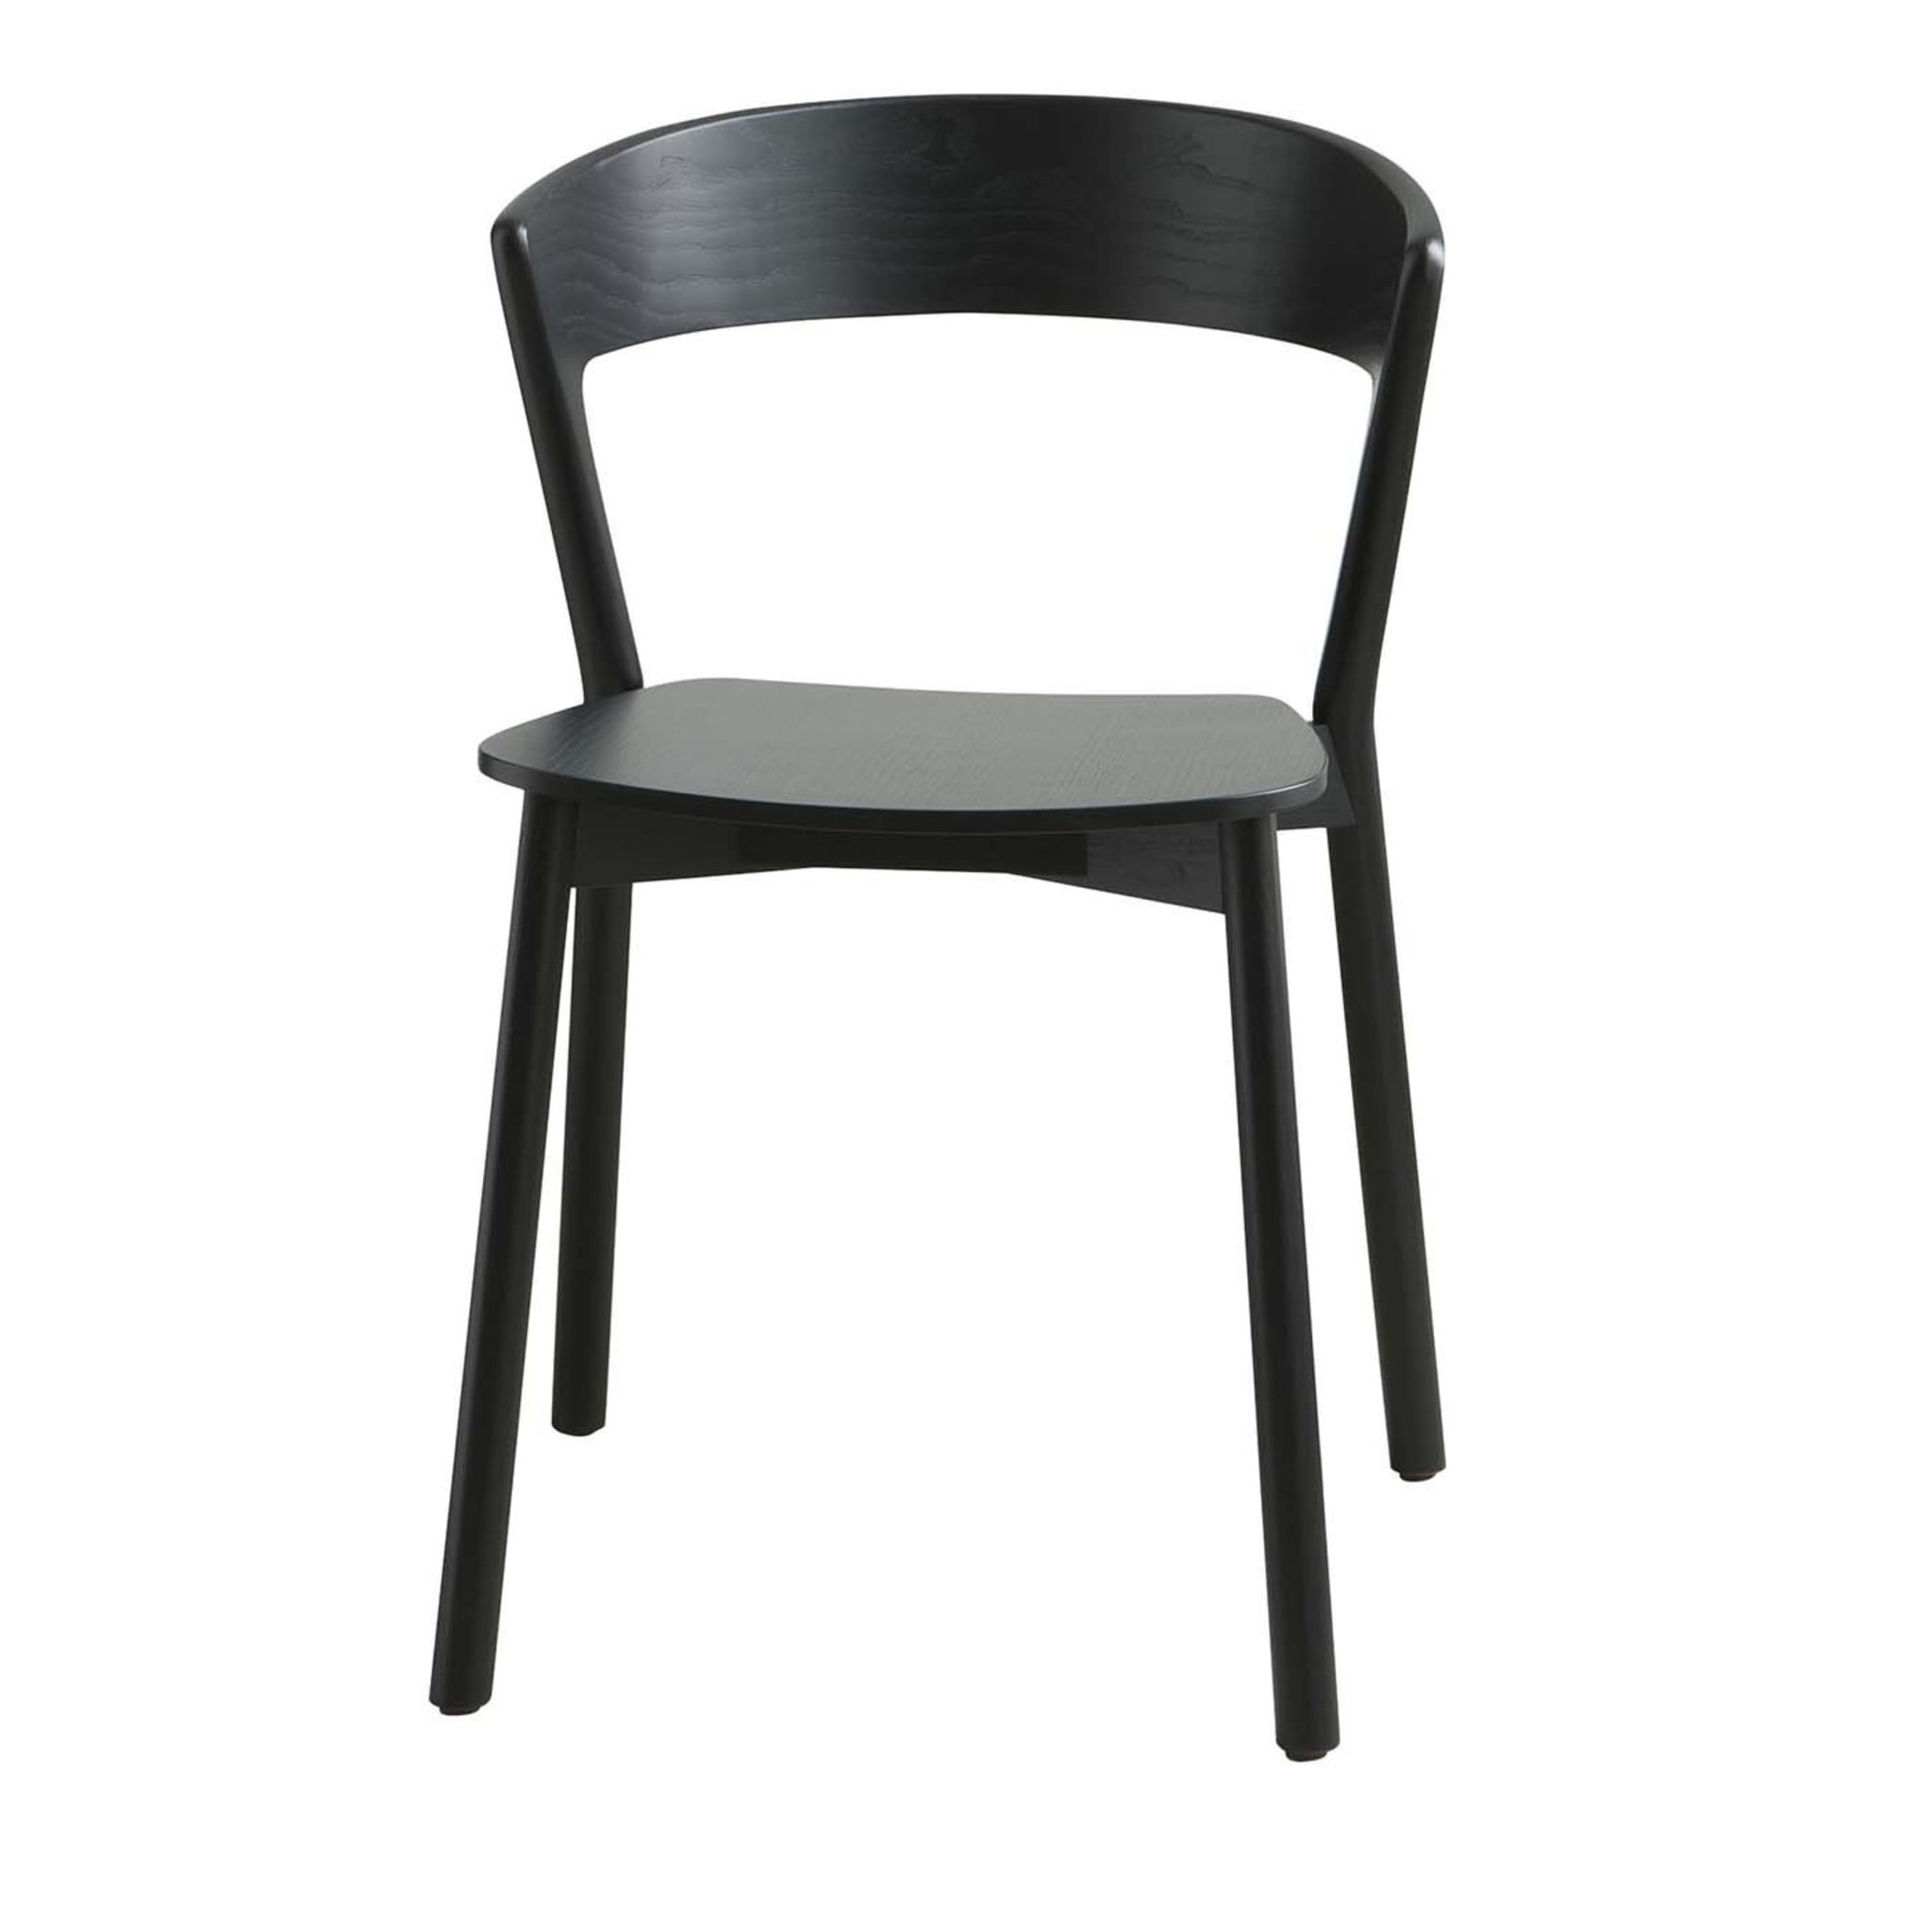 Edith Le Black Chair by Massimo Broglio - Main view